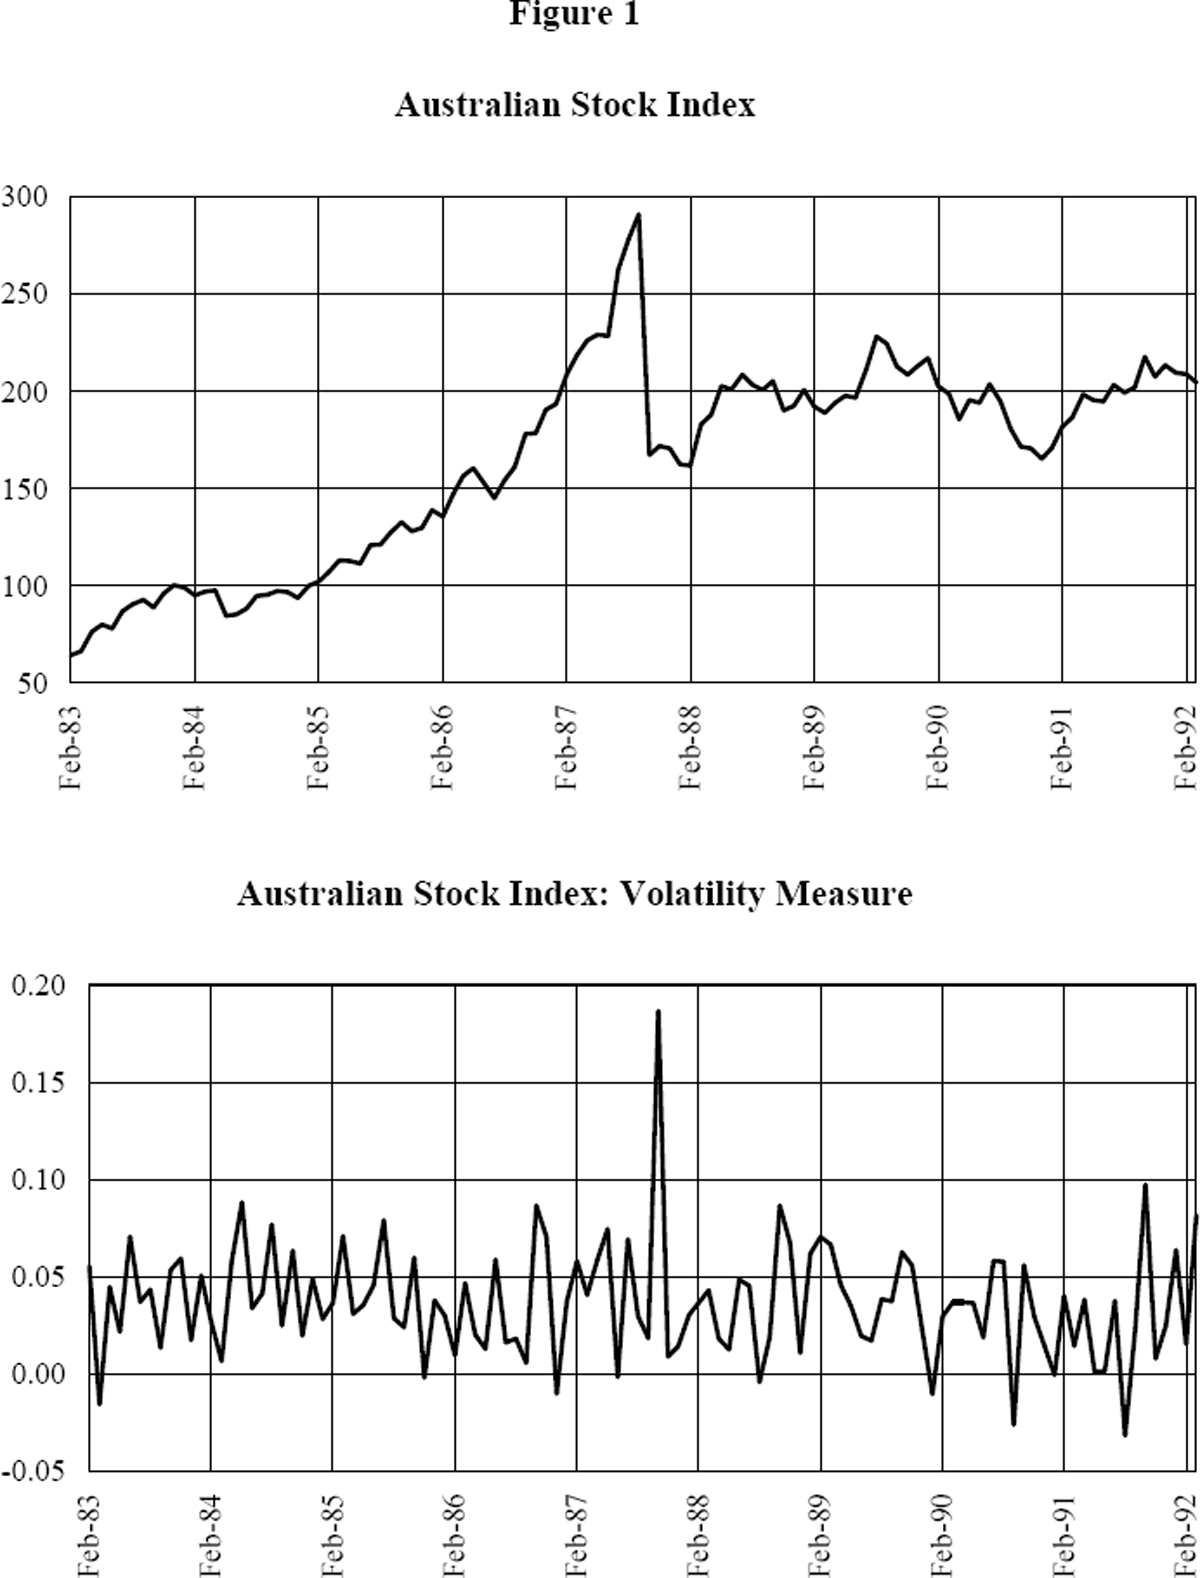 Figure 1: Australian Stock Index and Volatility Measure